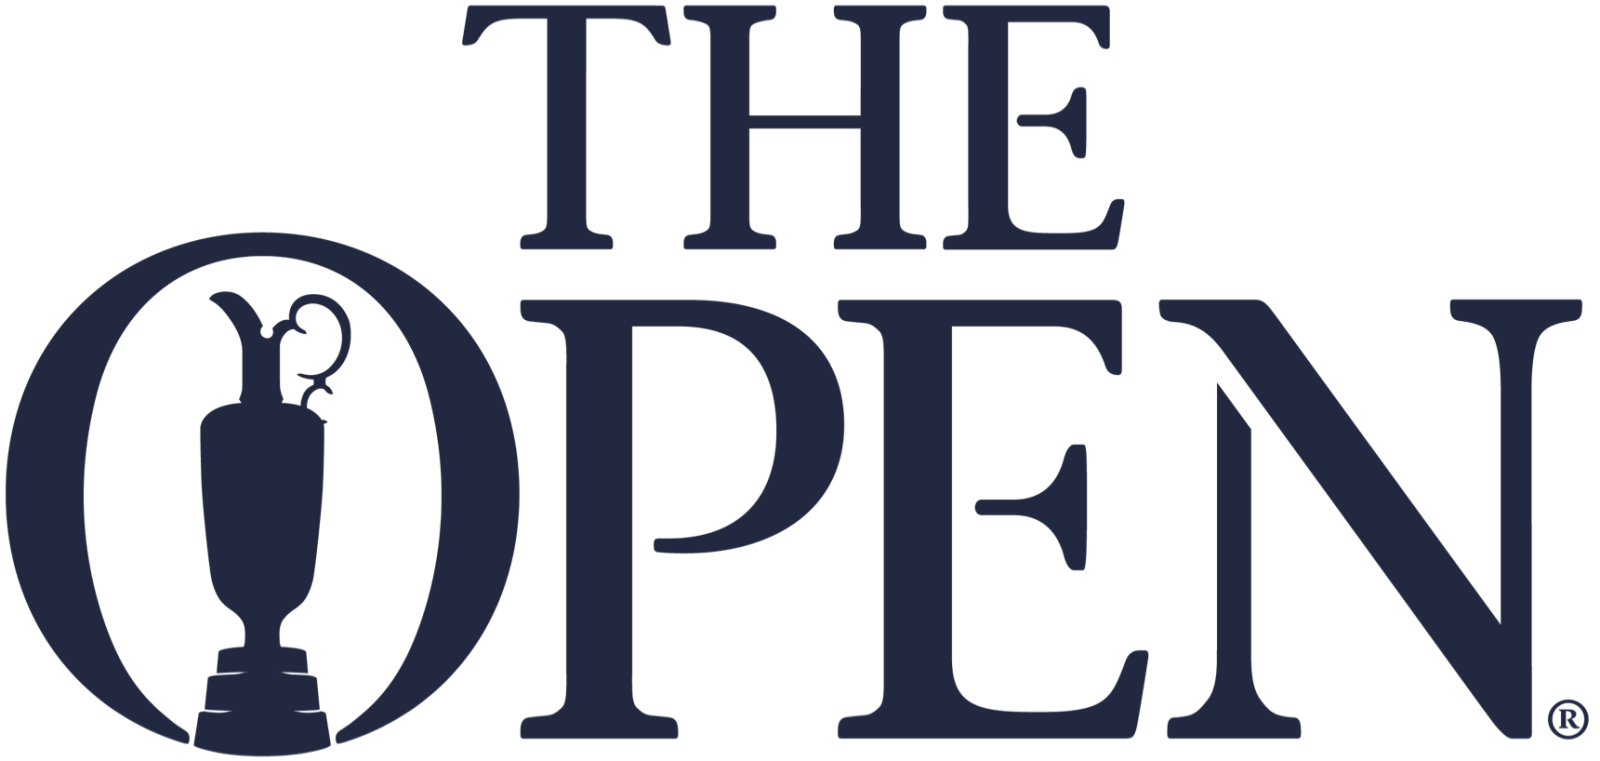 2019_Open_Championship_logo.png